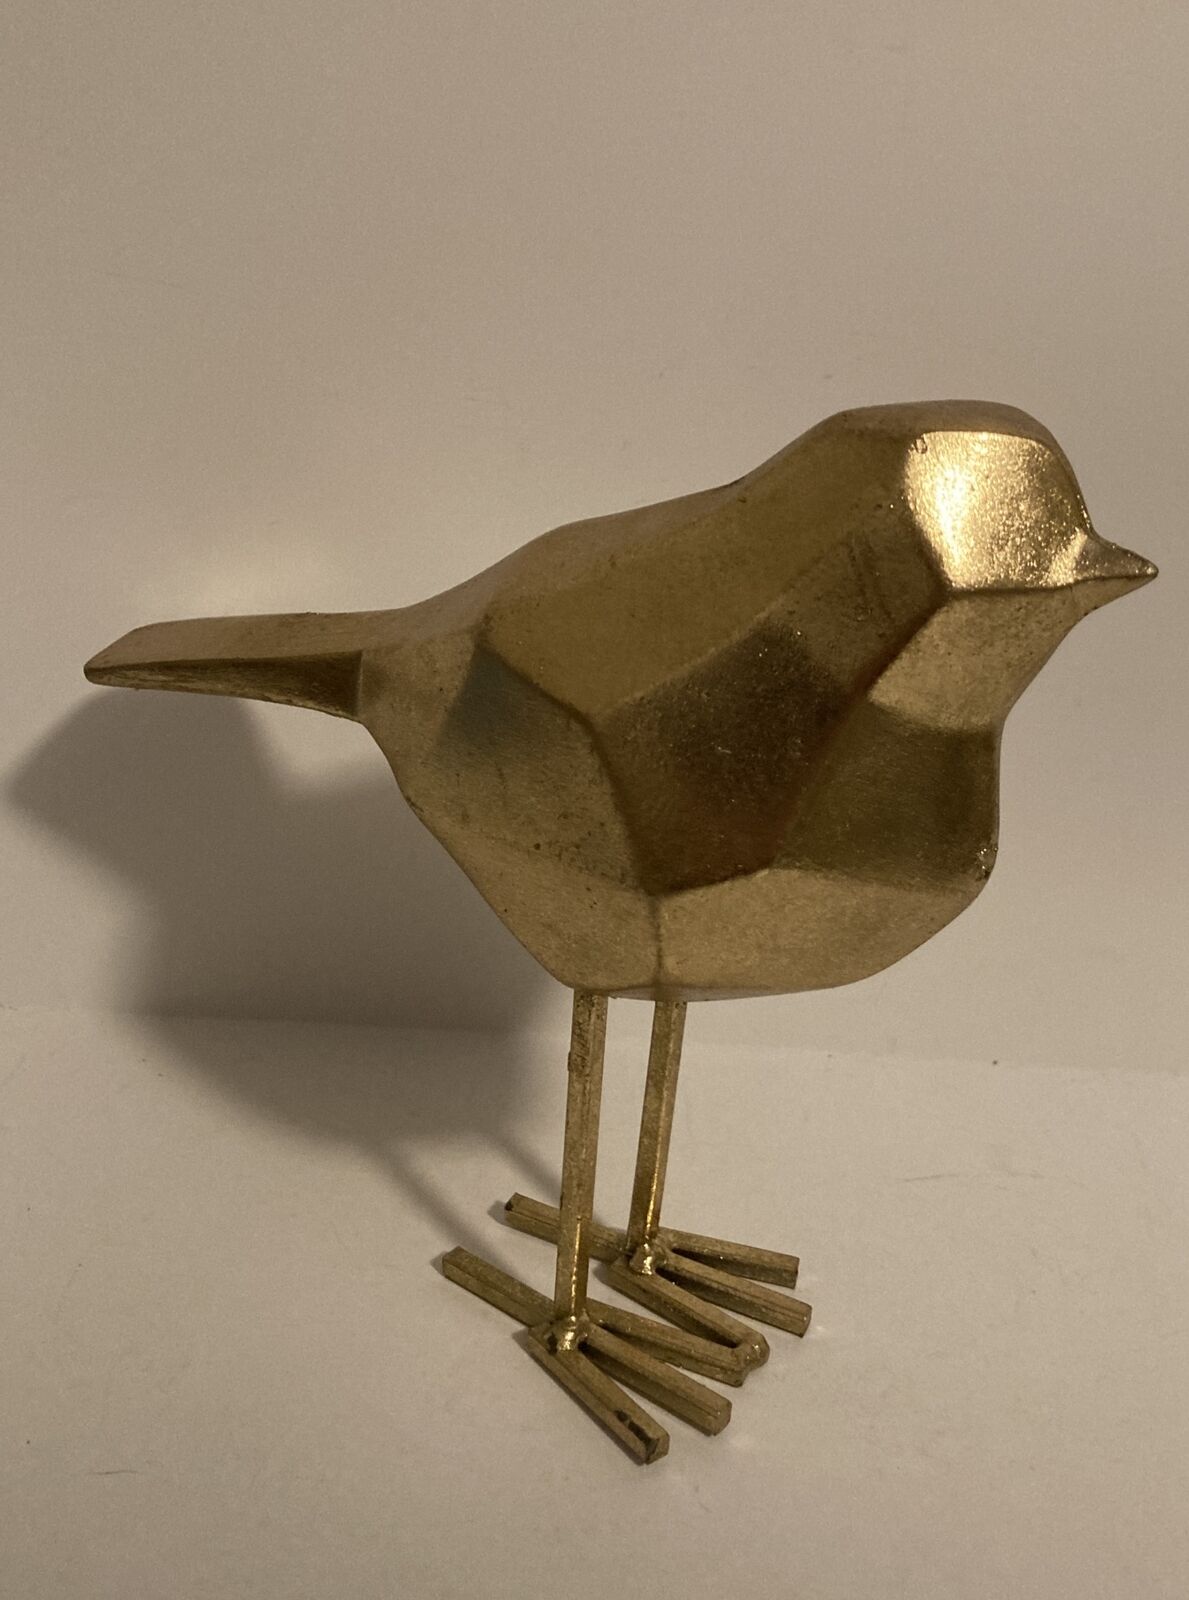 Gold Bird Geometric Sculptured Standing Figurine Contemporary Home Decor